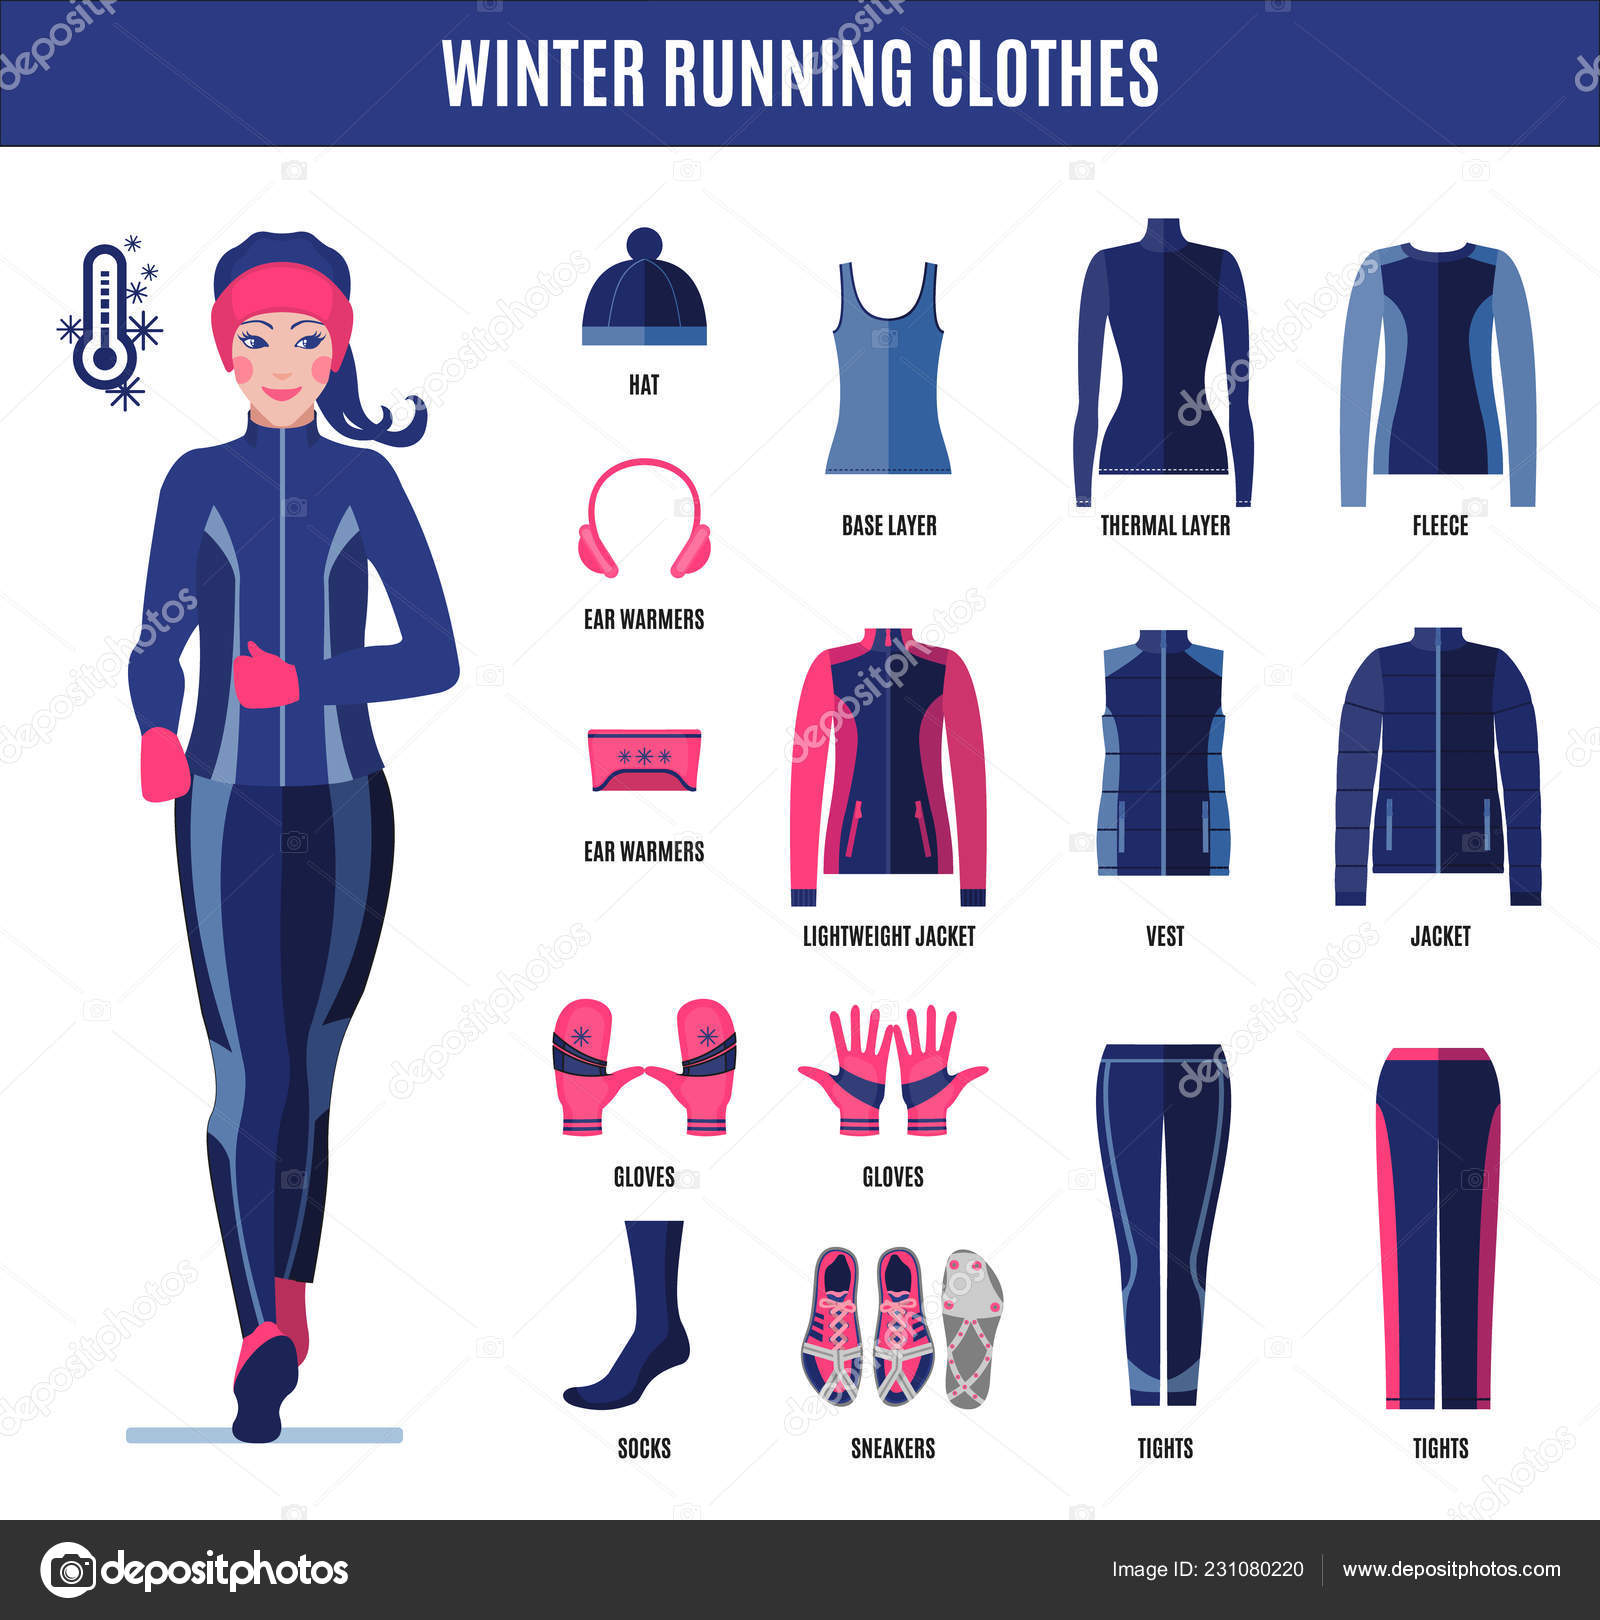 https://st4.depositphotos.com/1477081/23108/v/1600/depositphotos_231080220-stock-illustration-winter-running-clothes-set-woman.jpg